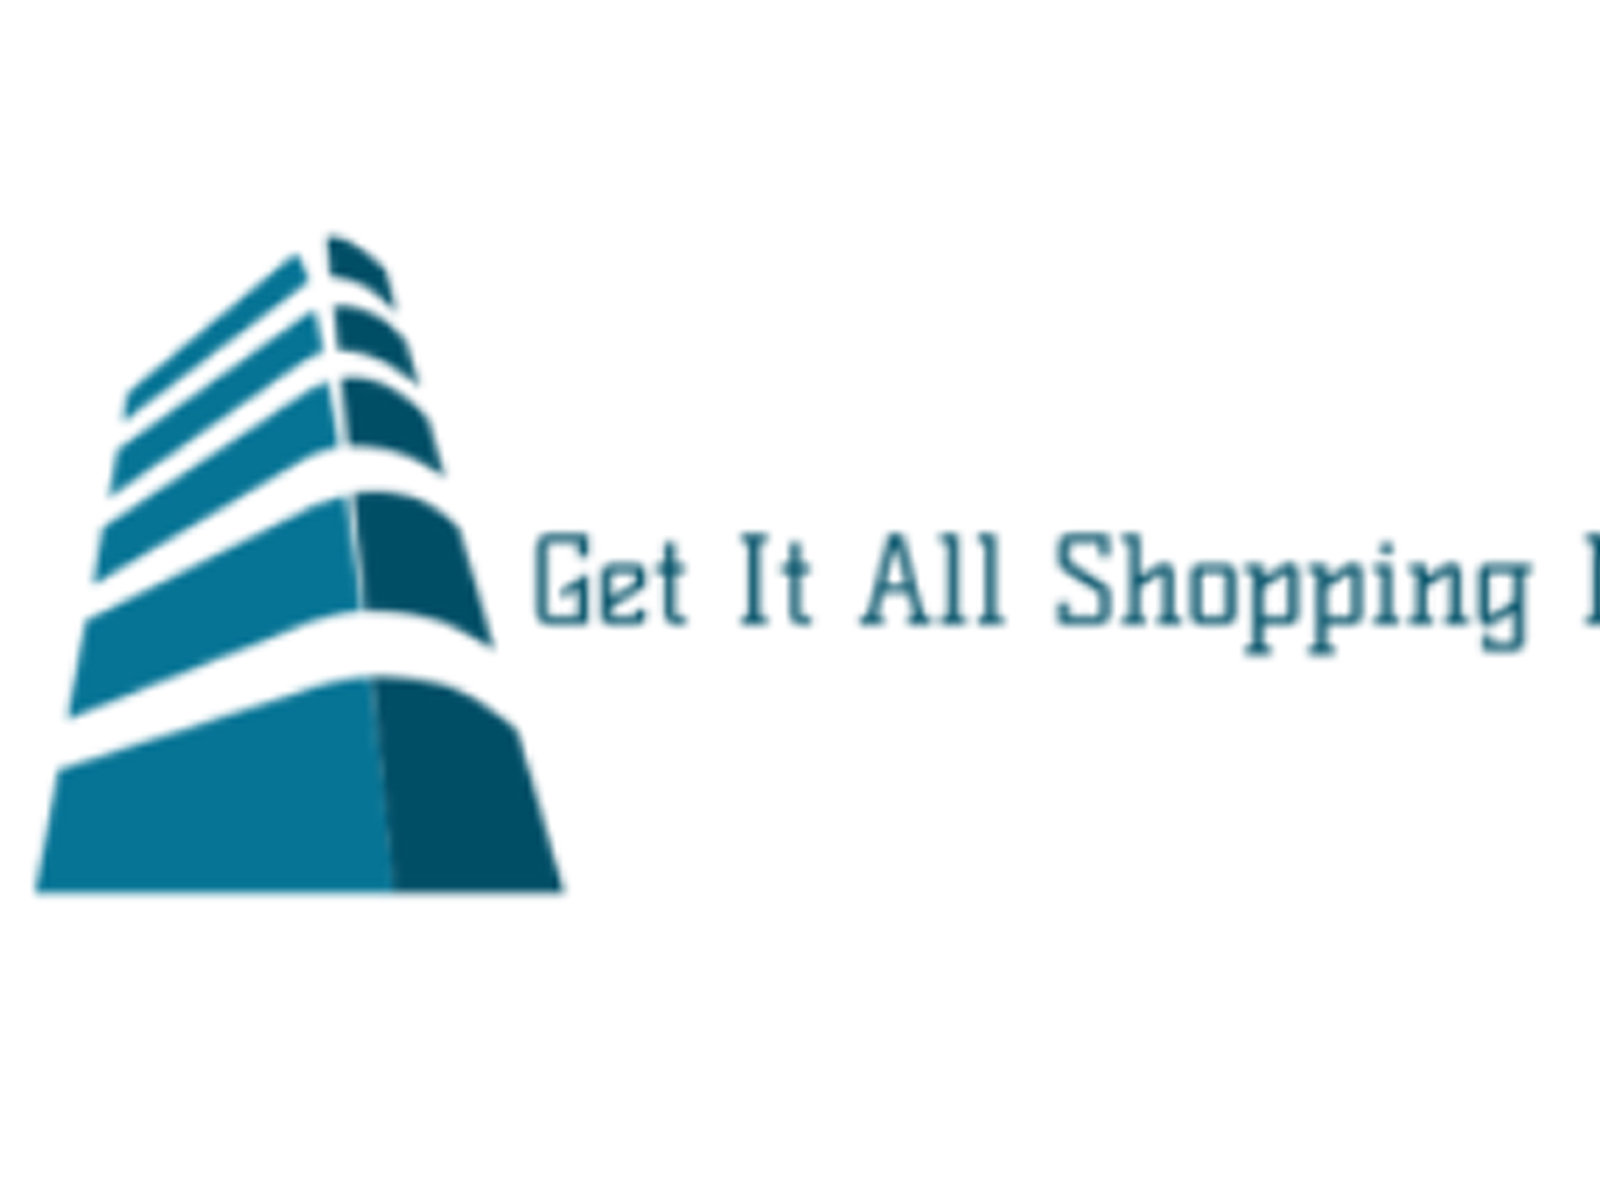 shopping mall logo by Abraham Benjamin on Dribbble